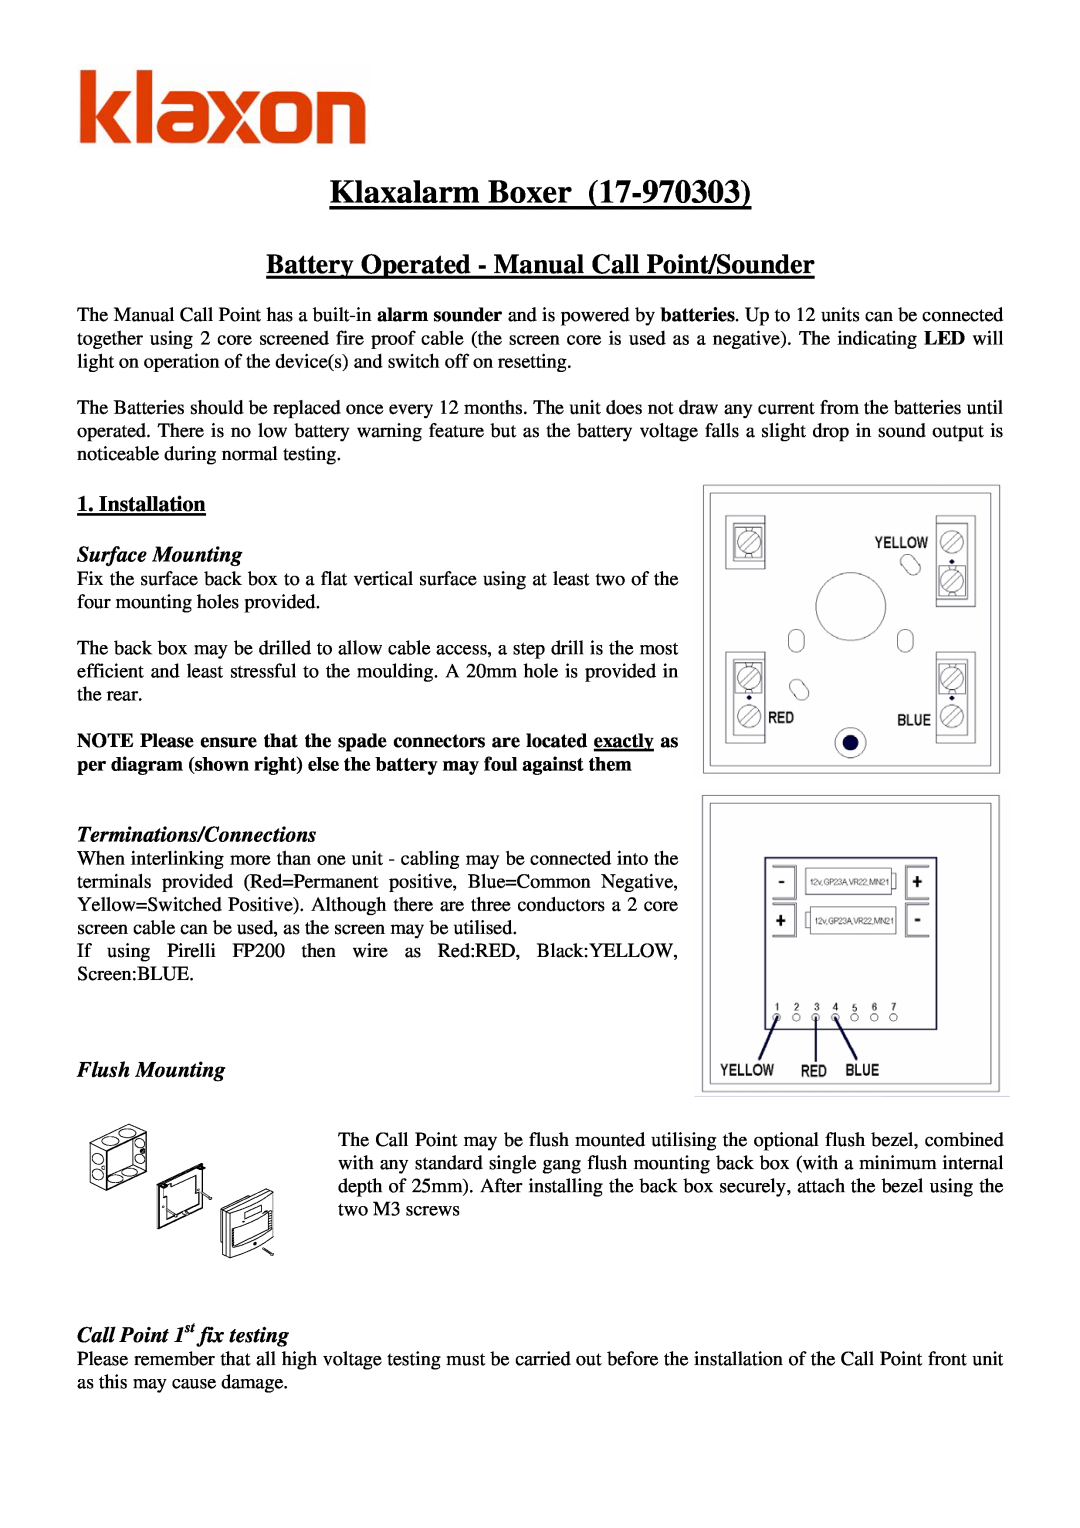 Klaxon 17-970303 manual Installation, Surface Mounting, Terminations/Connections, Flush Mounting, Klaxalarm Boxer 